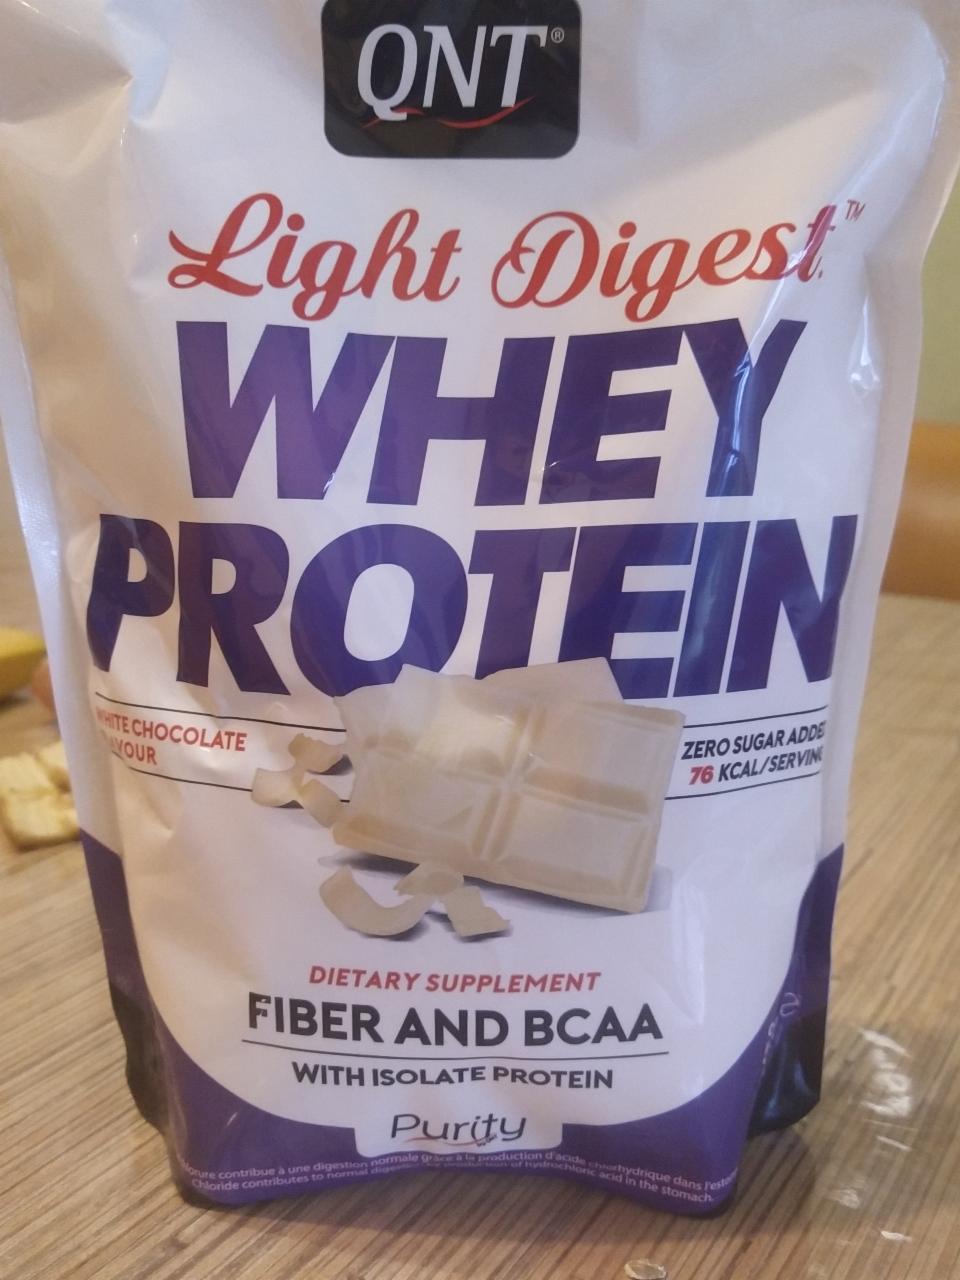 Fotografie - light digest whey protein white chocolate QNT